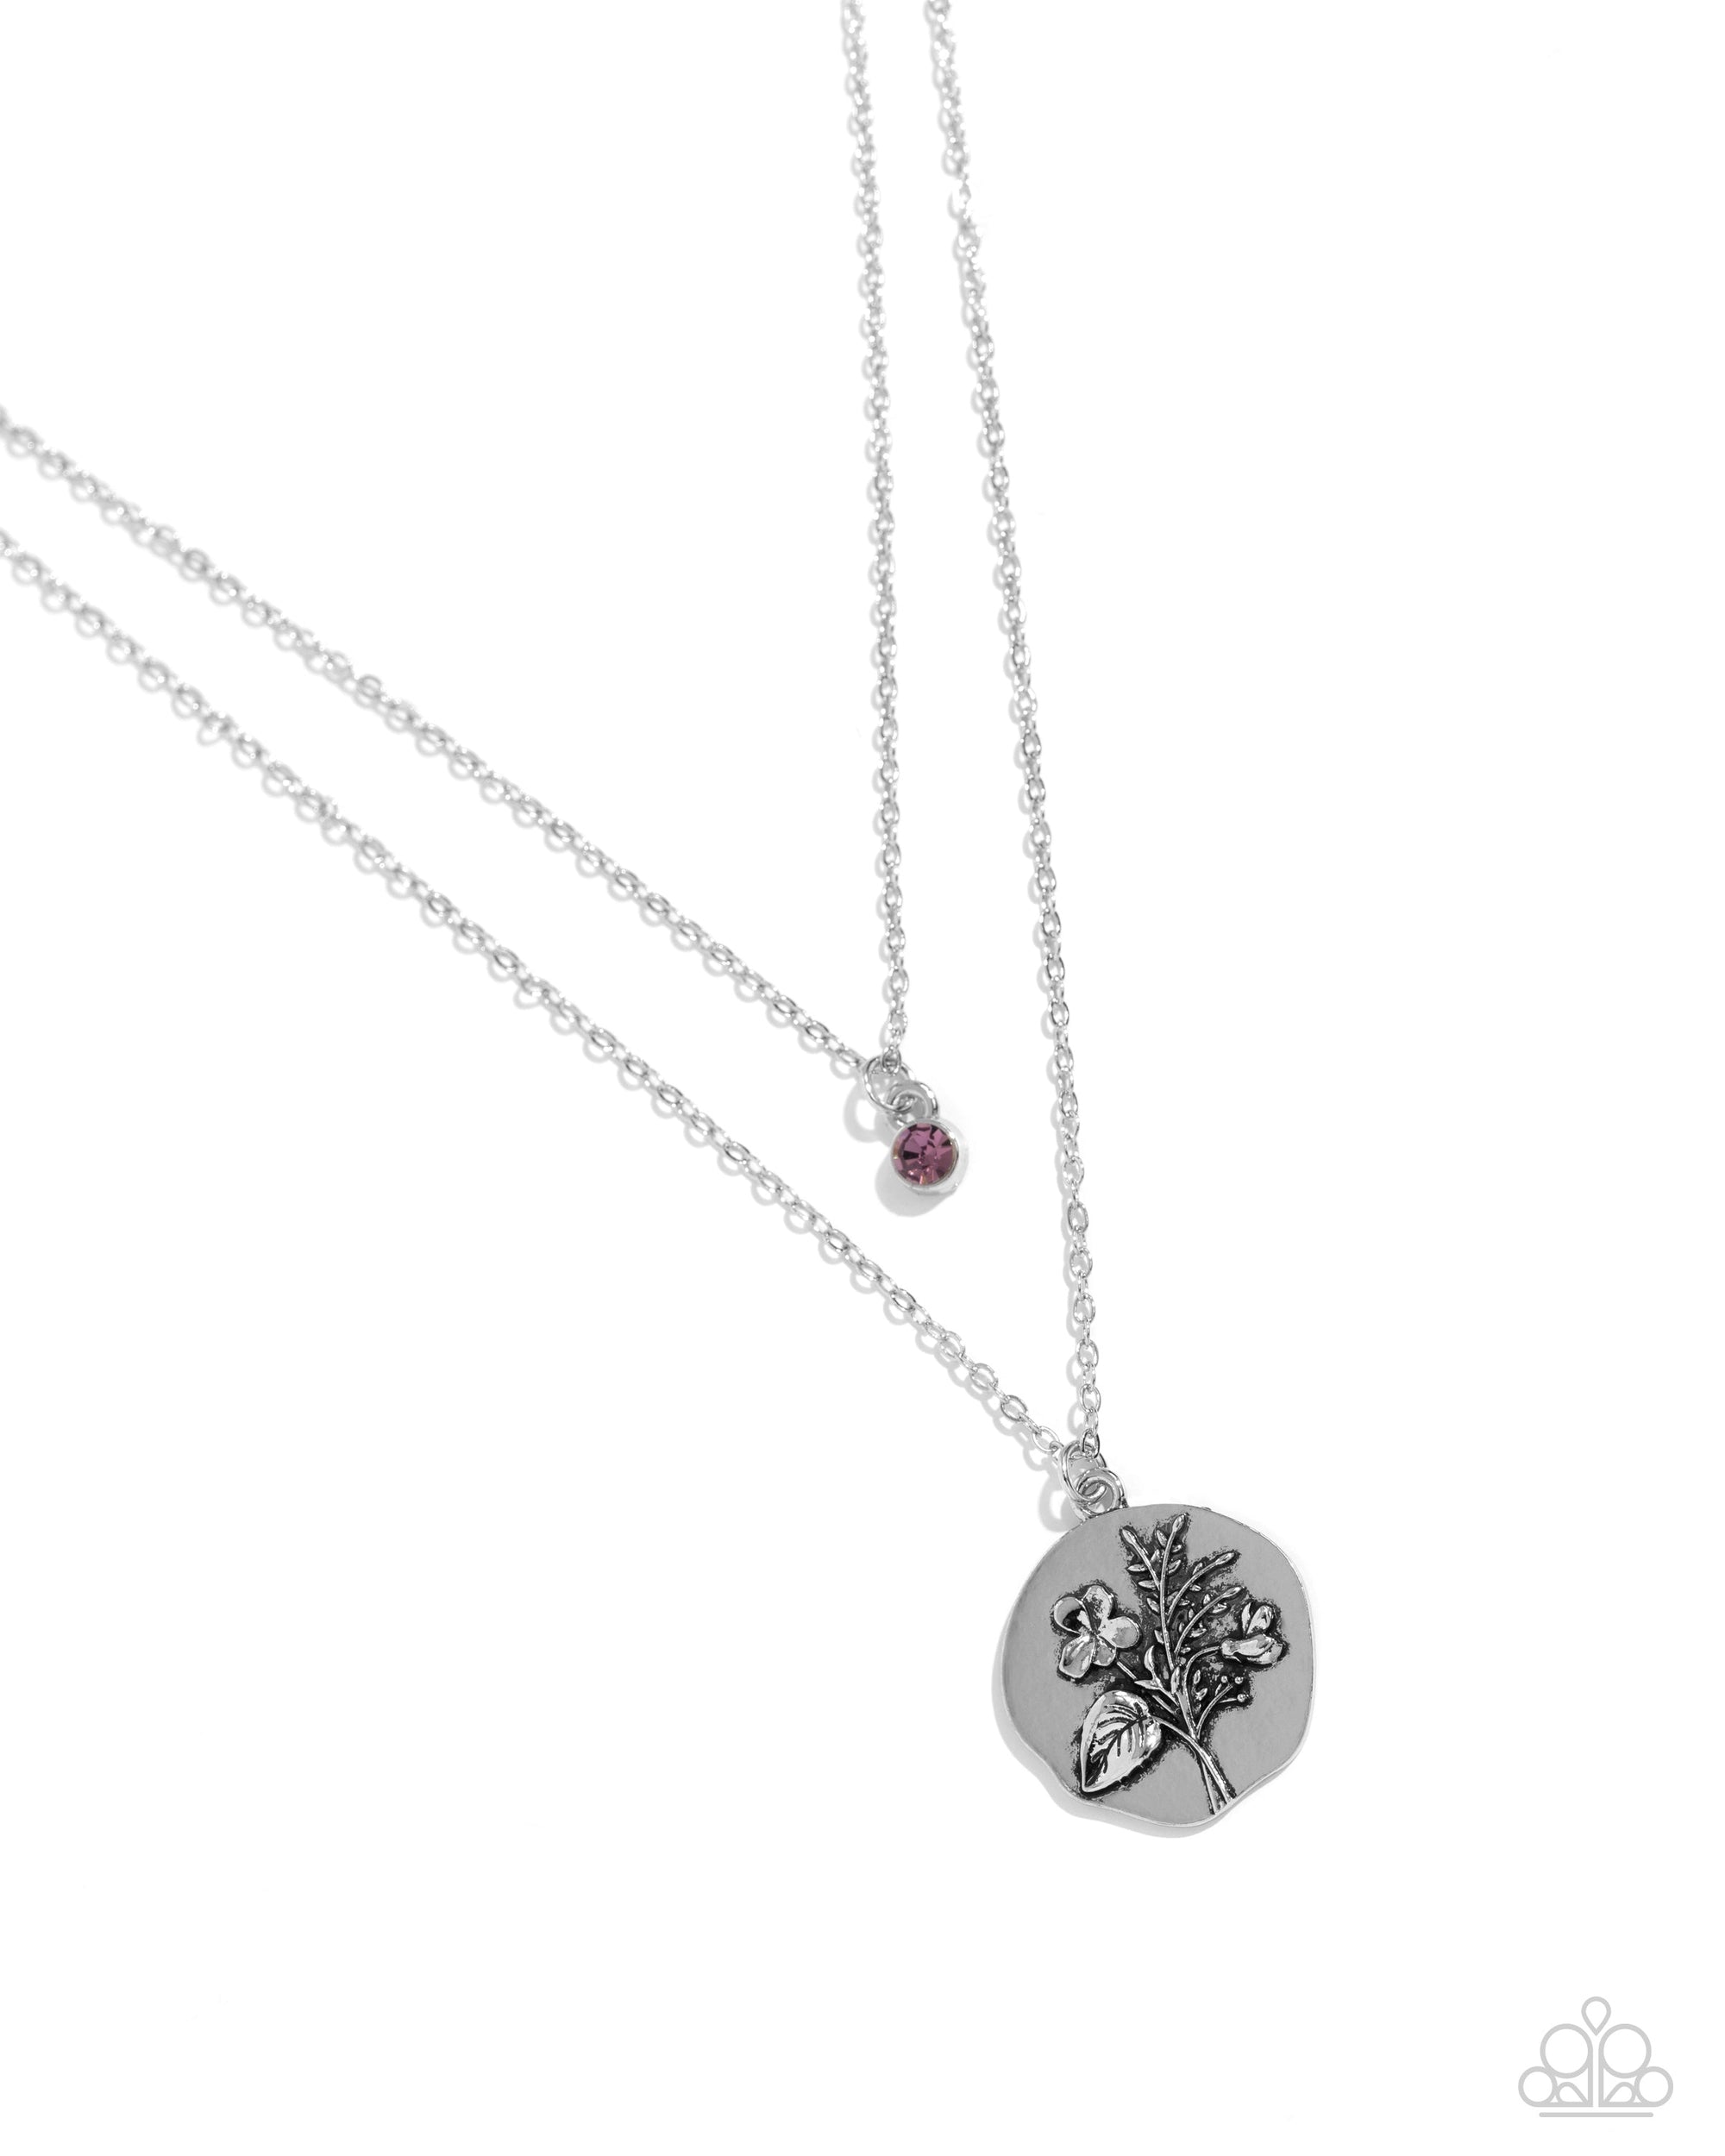 Birthstone Beauty (February) Amethyst Purple Rhinestone Necklace - Paparazzi Accessories- lightbox - CarasShop.com - $5 Jewelry by Cara Jewels